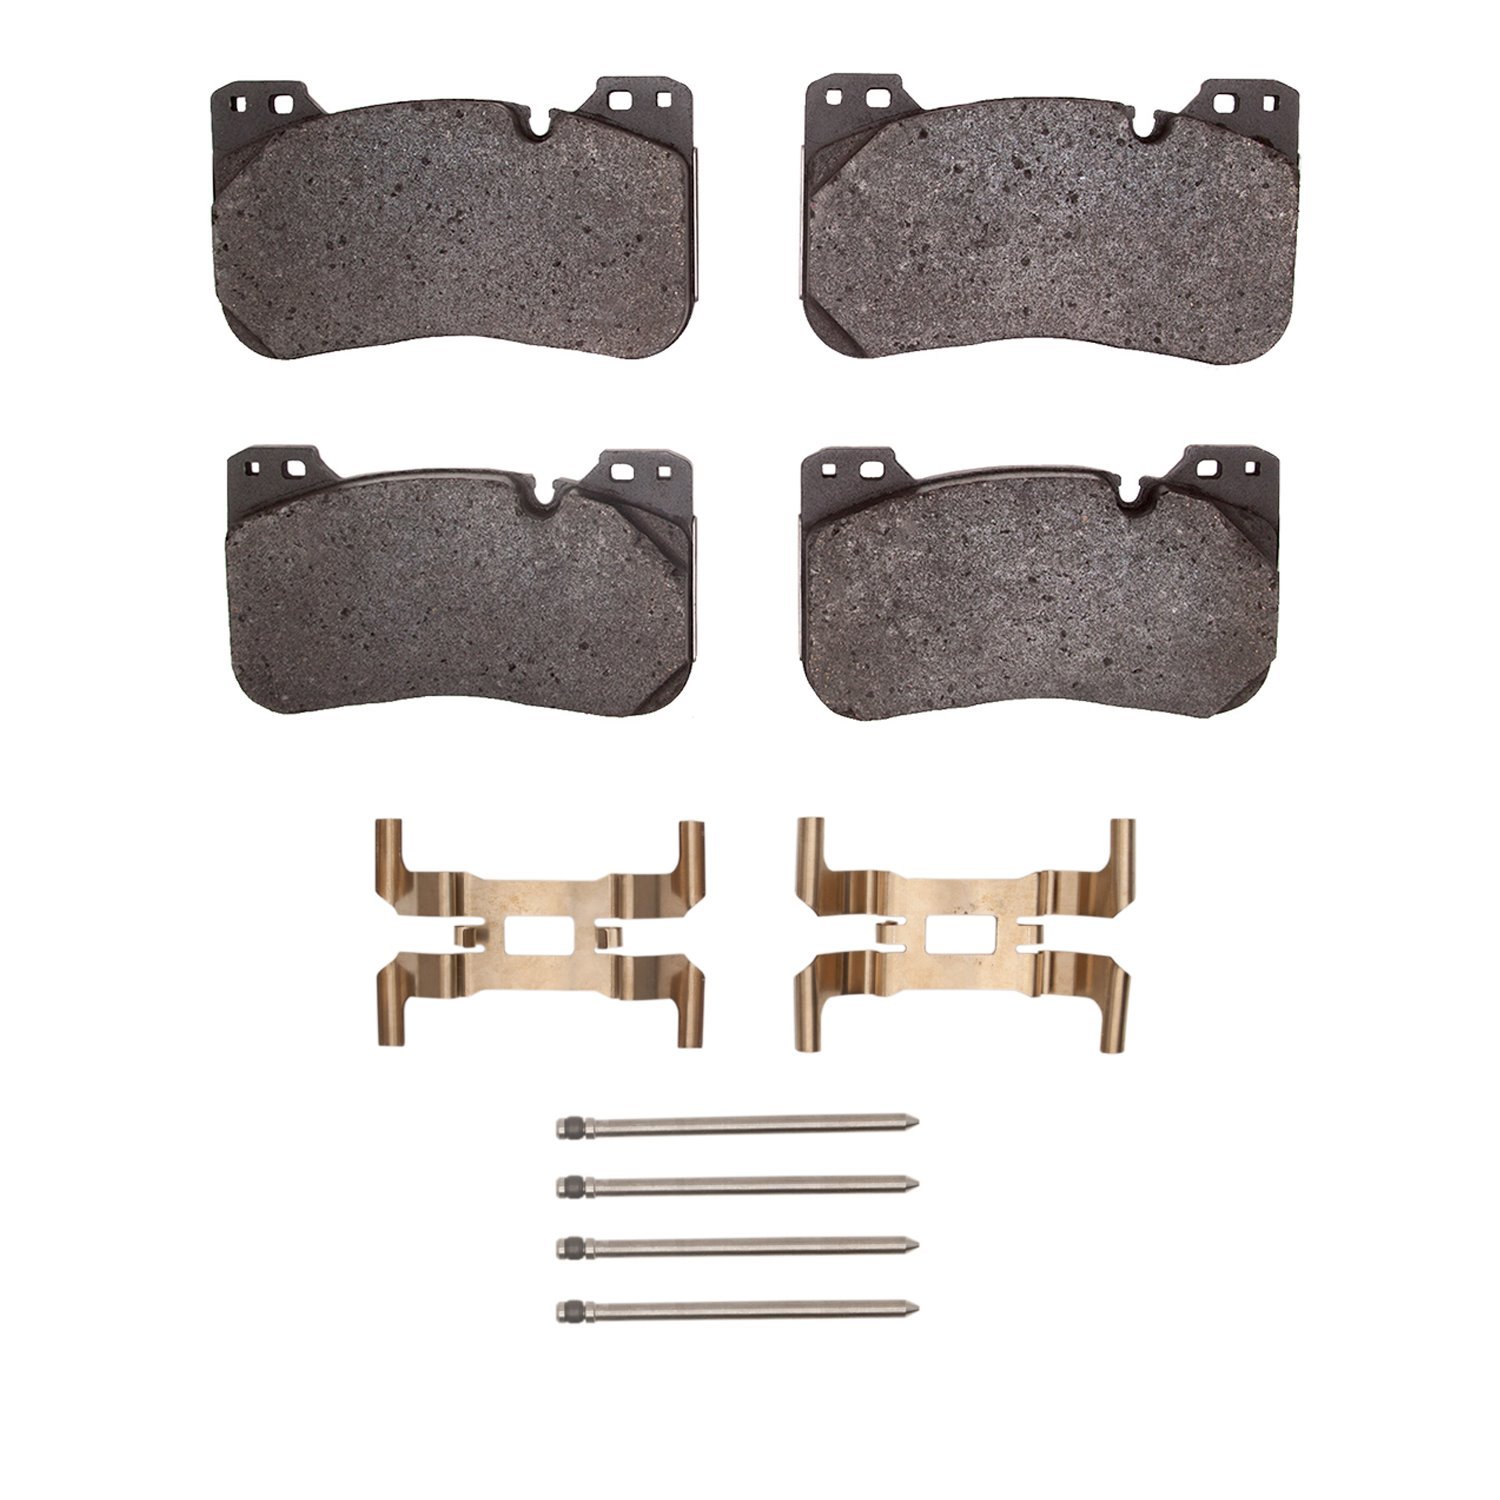 Optimum OE Brake Pads & Hardware Kit, Fits Select BMW, Position: Front